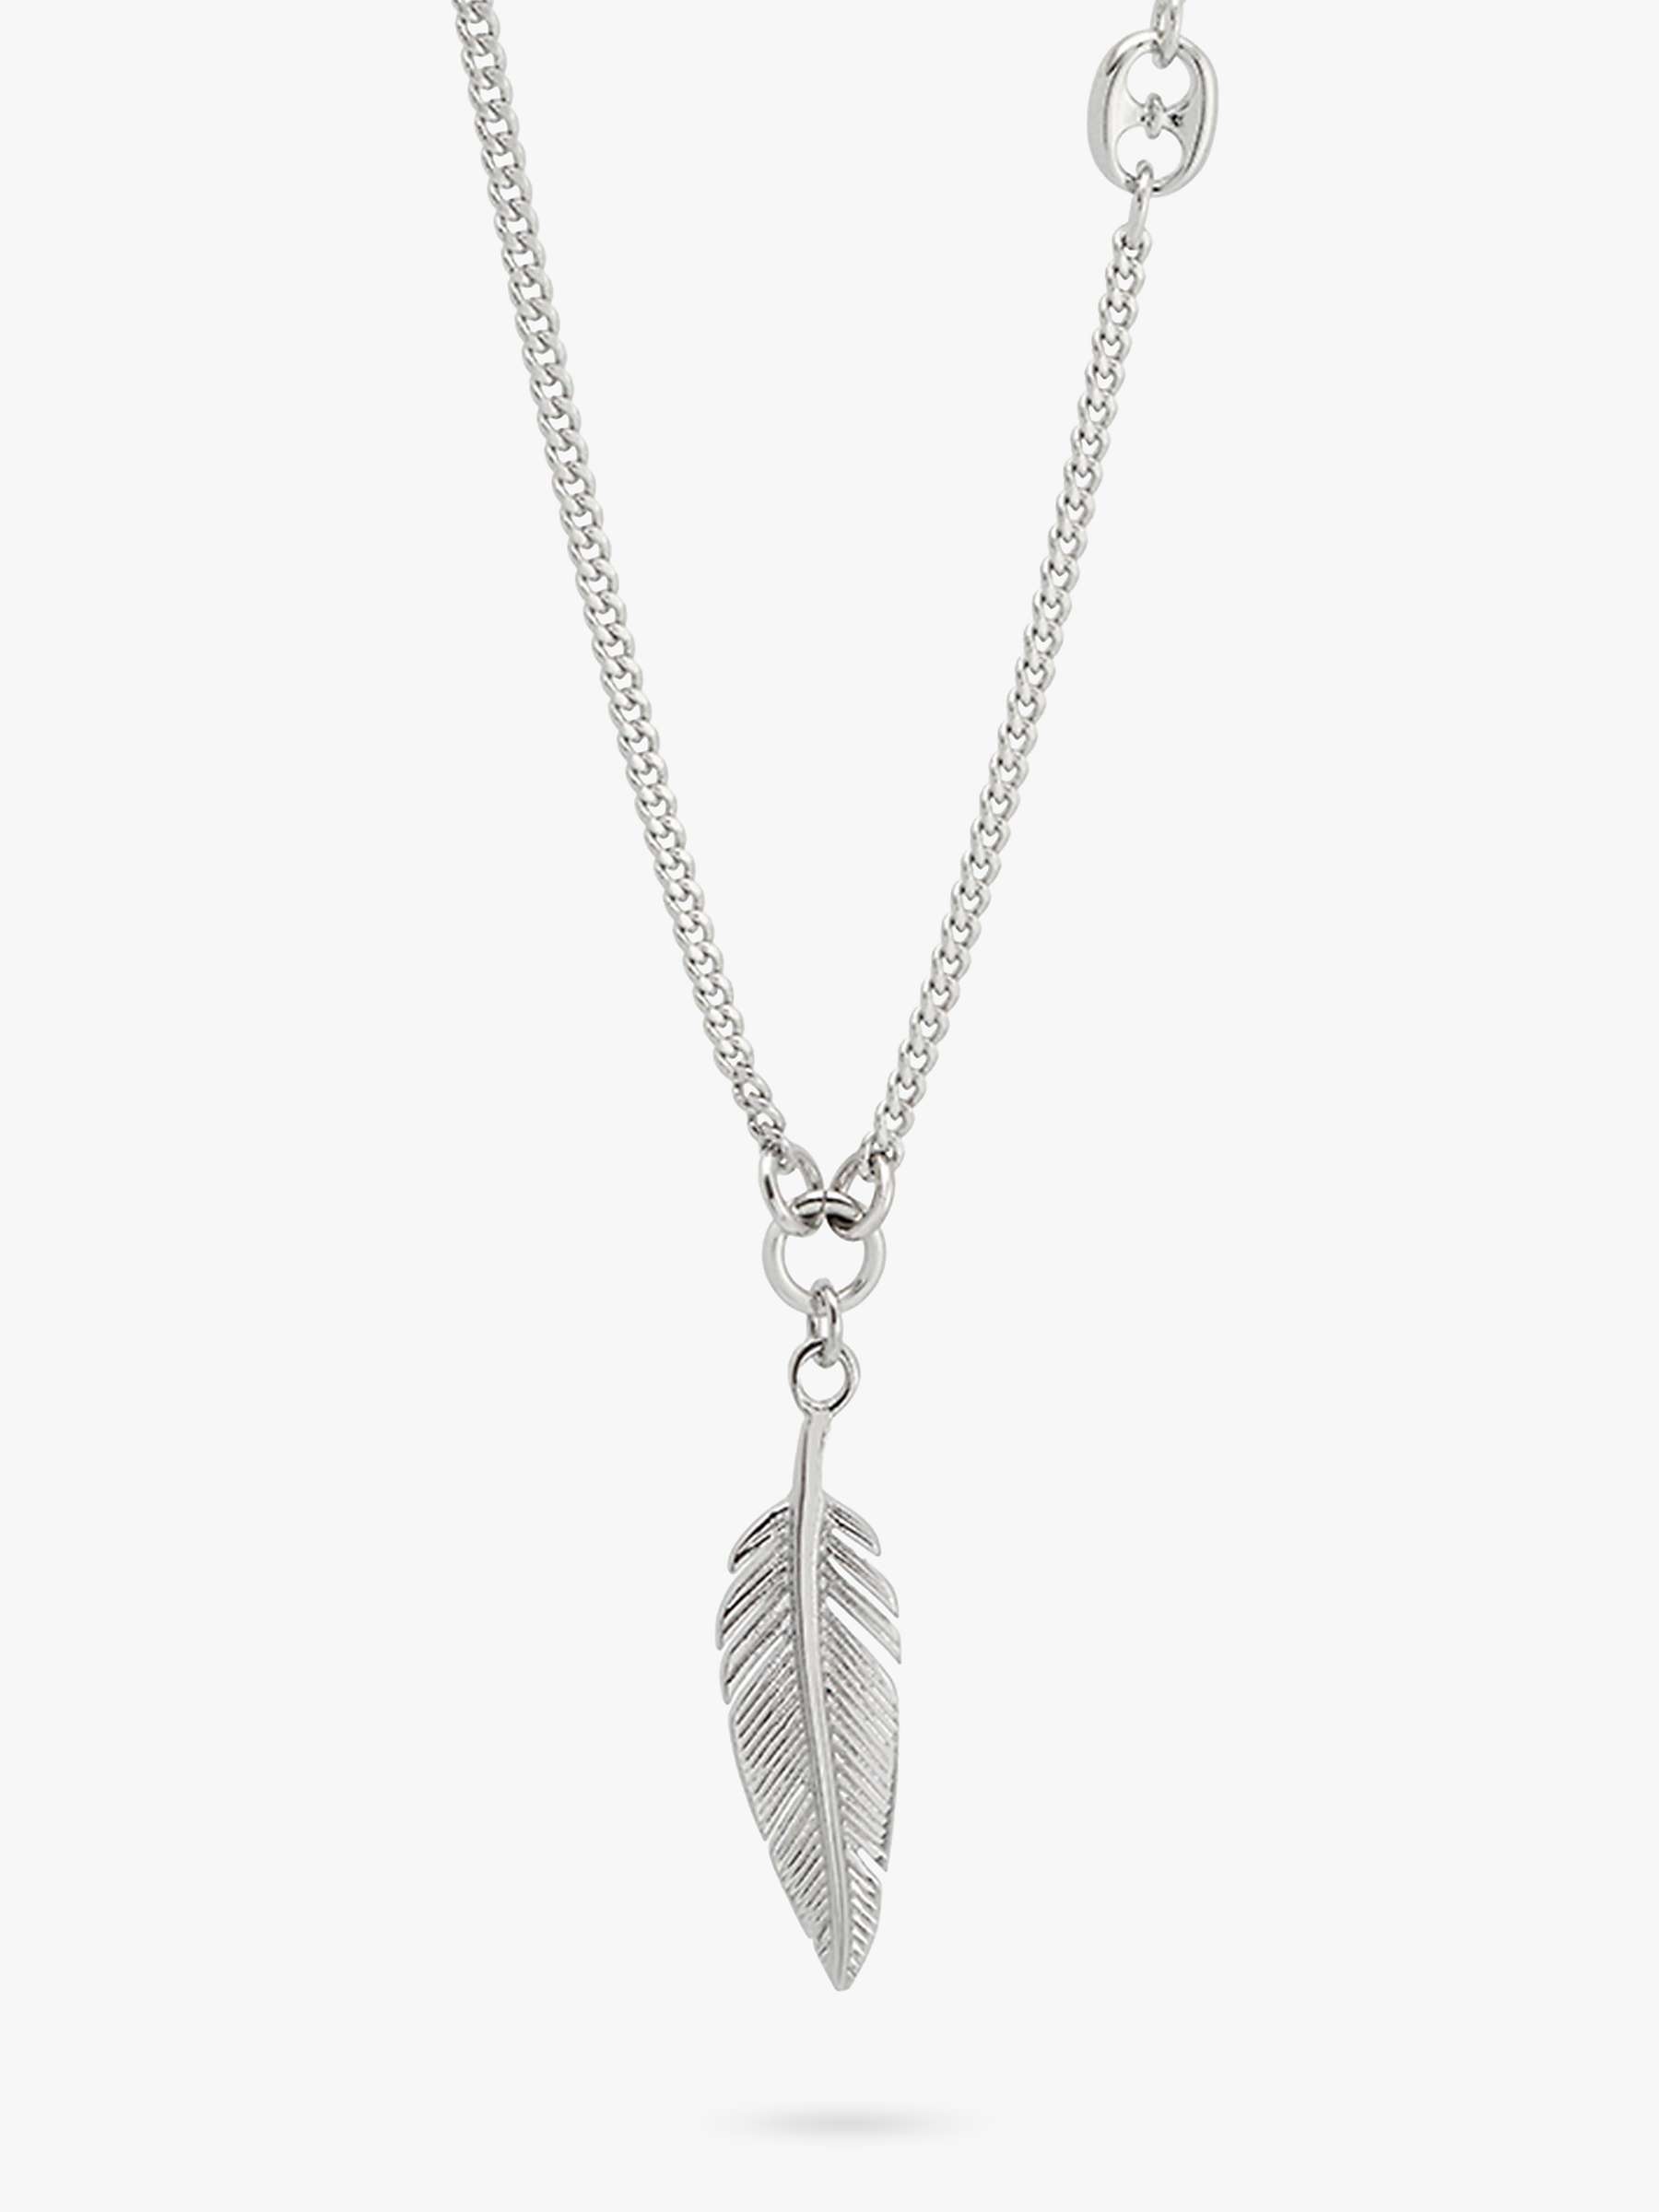 Buy BARTLETT LONDON Men's Feather Pendant Necklace, Silver Online at johnlewis.com